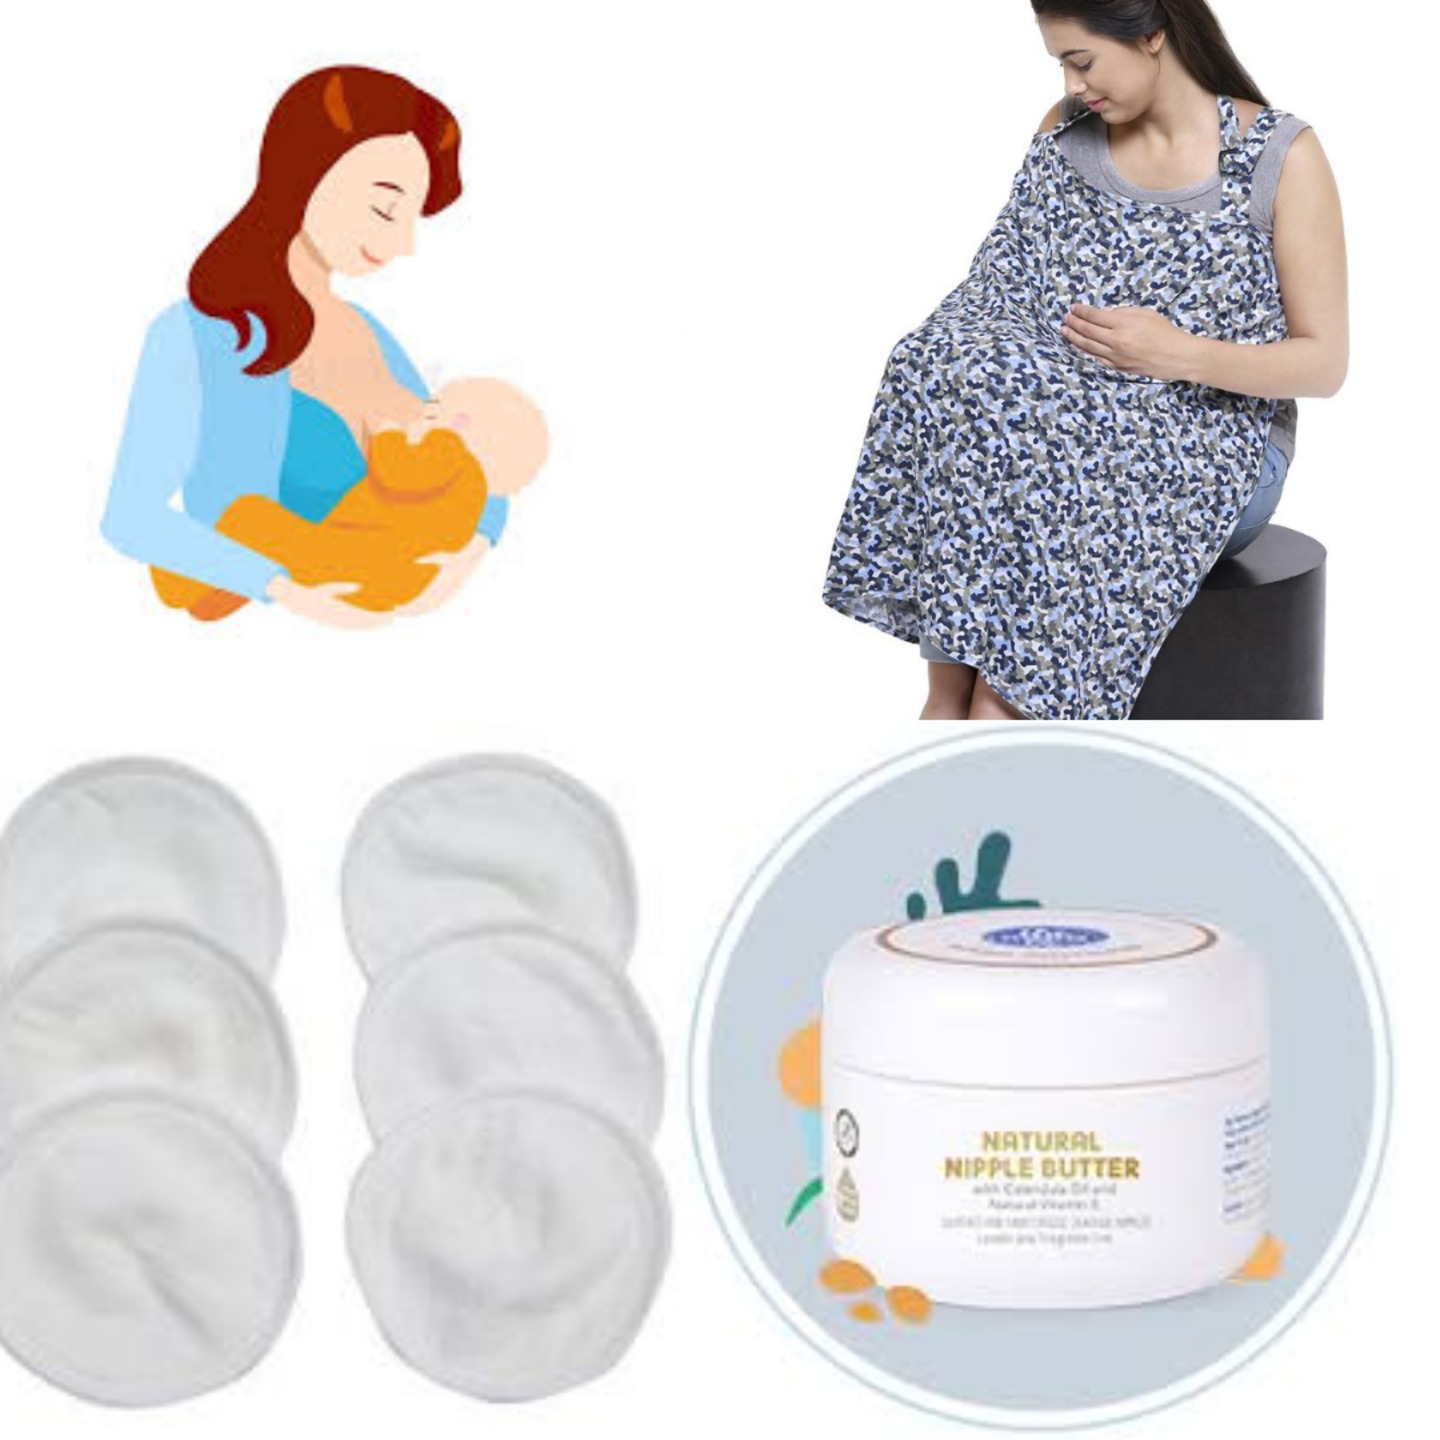 Breastfeeding Survival Kit for New Moms - Set of 3 pcs 